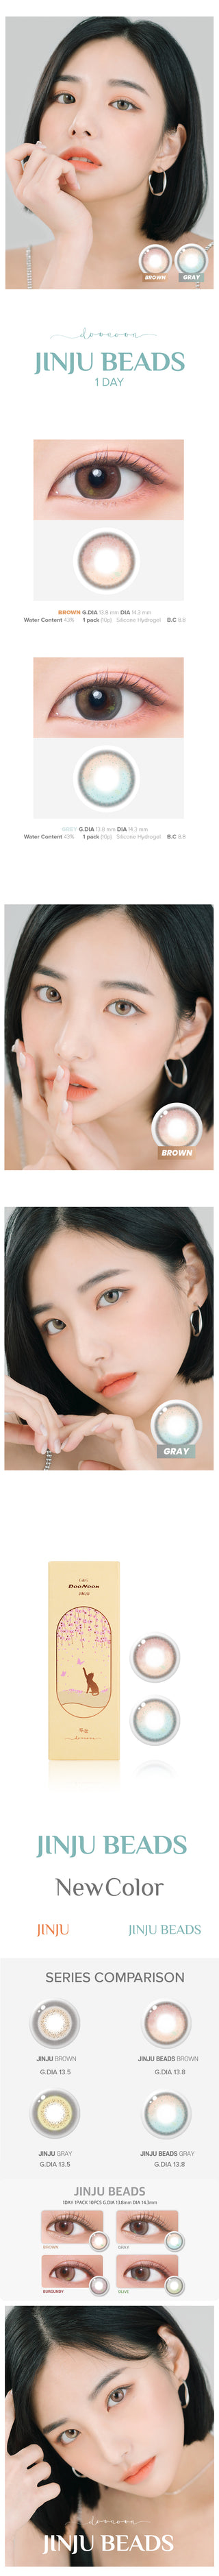 DooNoon Jinju Beads 1-Day Grey (10pk) Colored Contacts Circle Lenses - EyeCandys